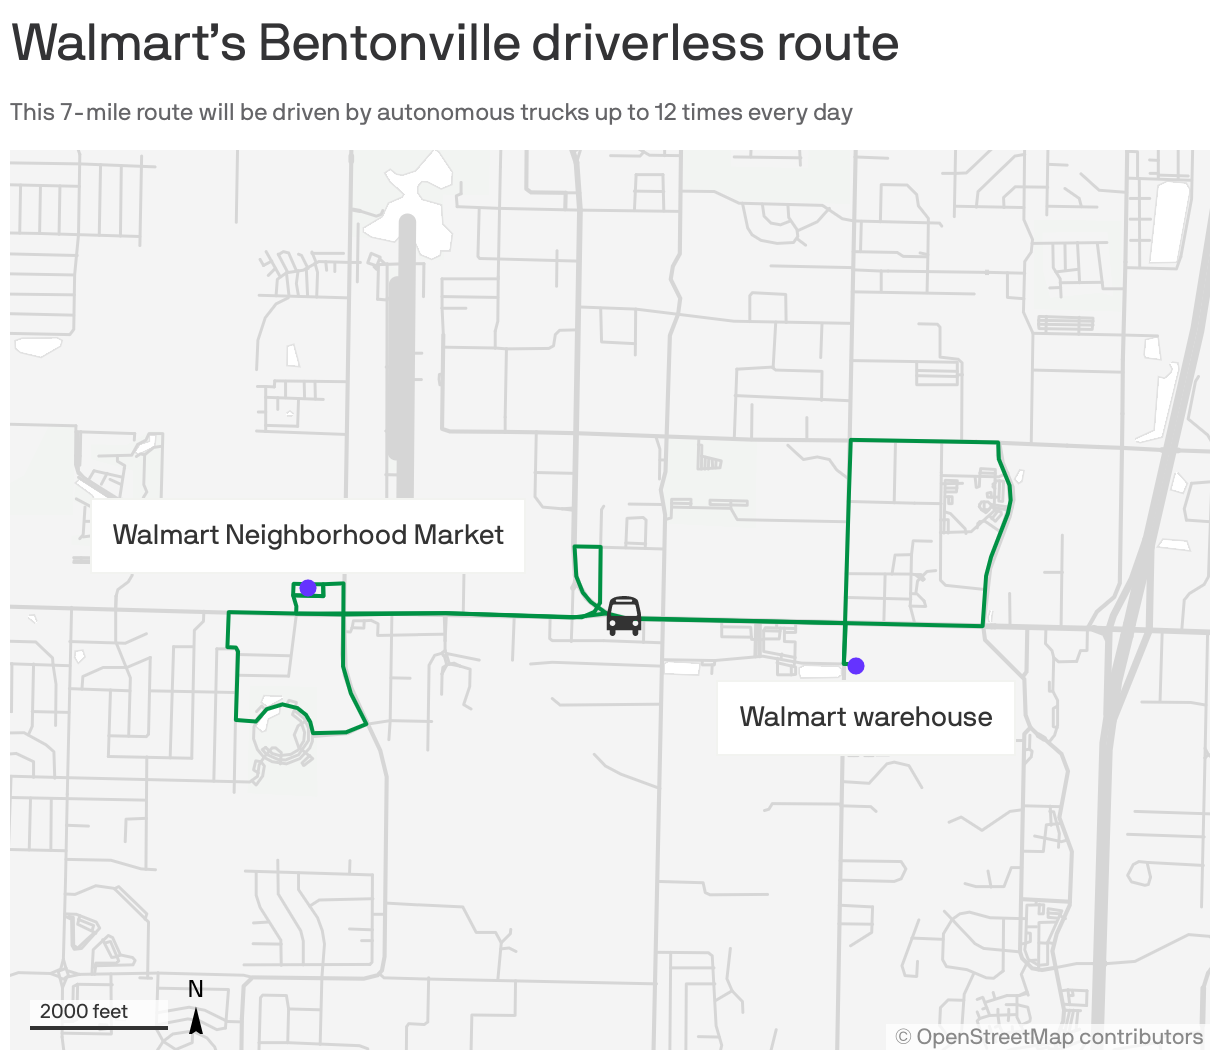 Walmart’s Bentonville driverless route